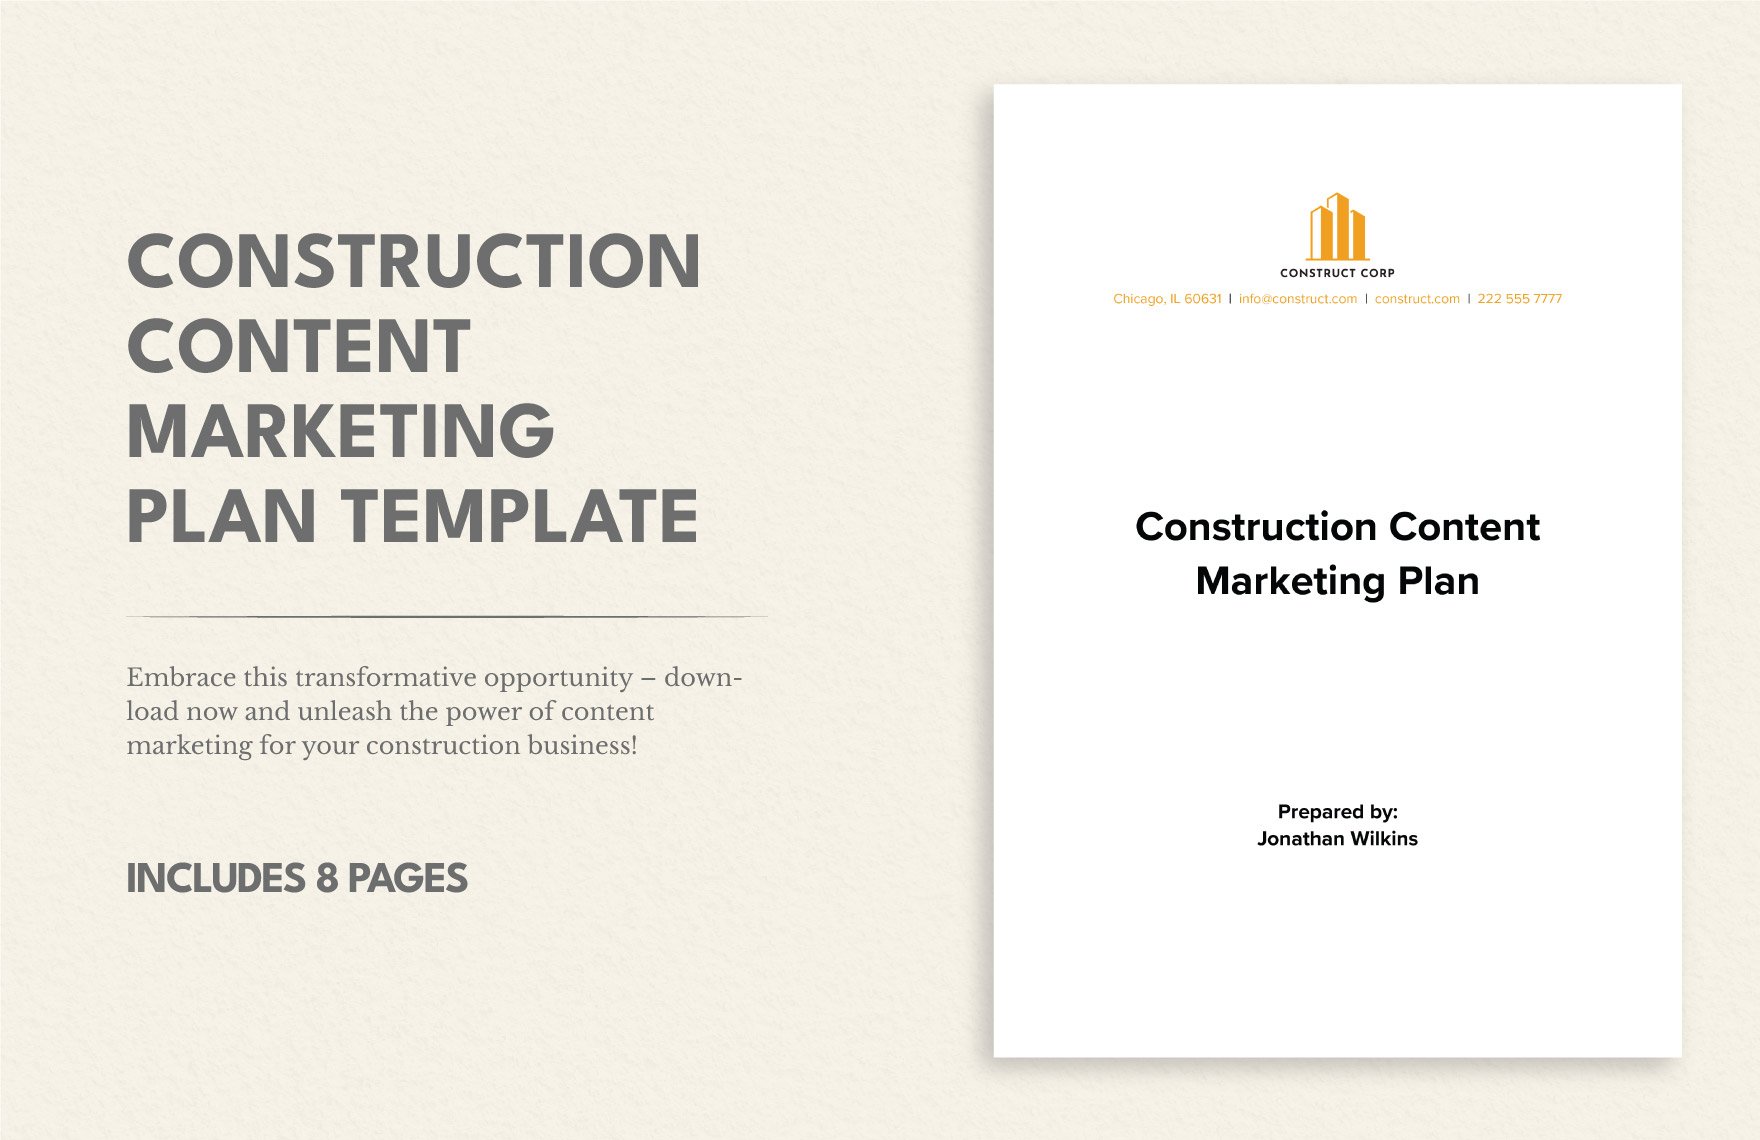 Construction Content Marketing Plan Template